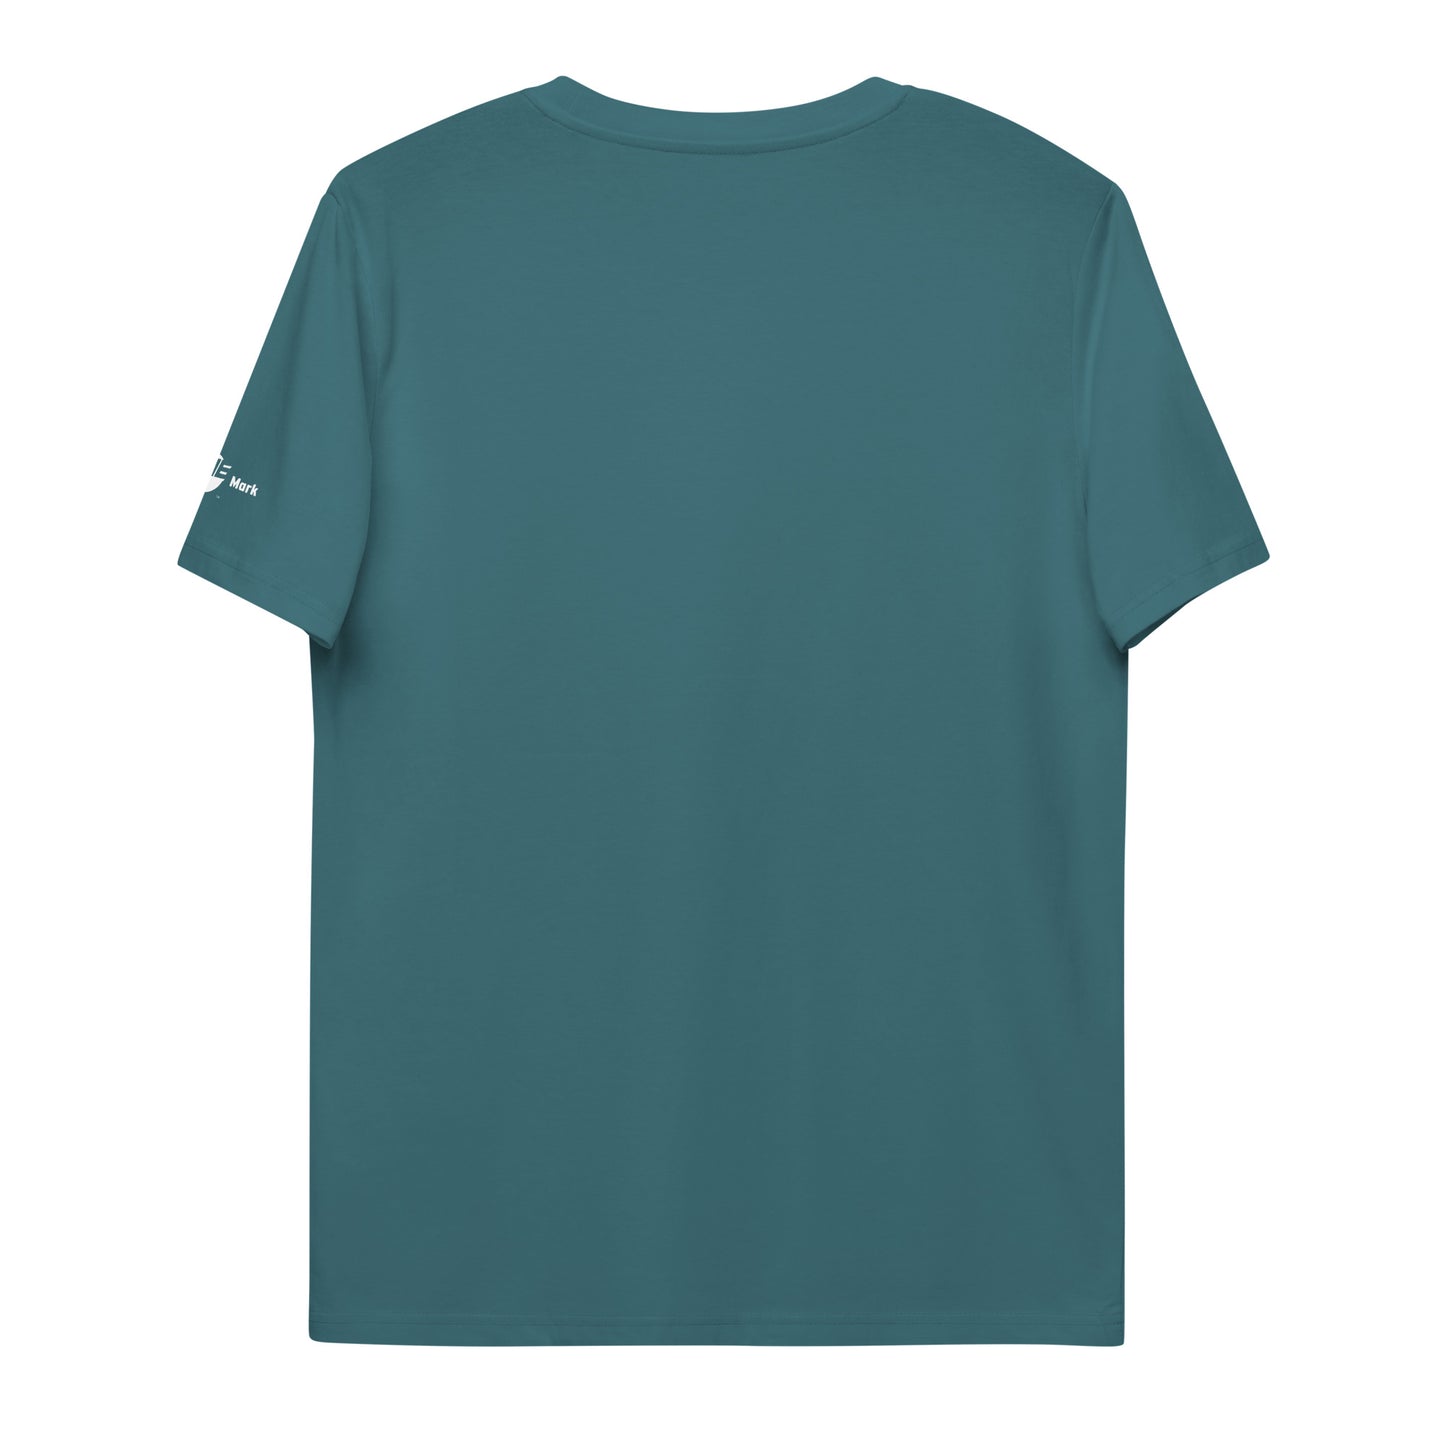 SHE Waves - Unisex organic cotton t-shirt